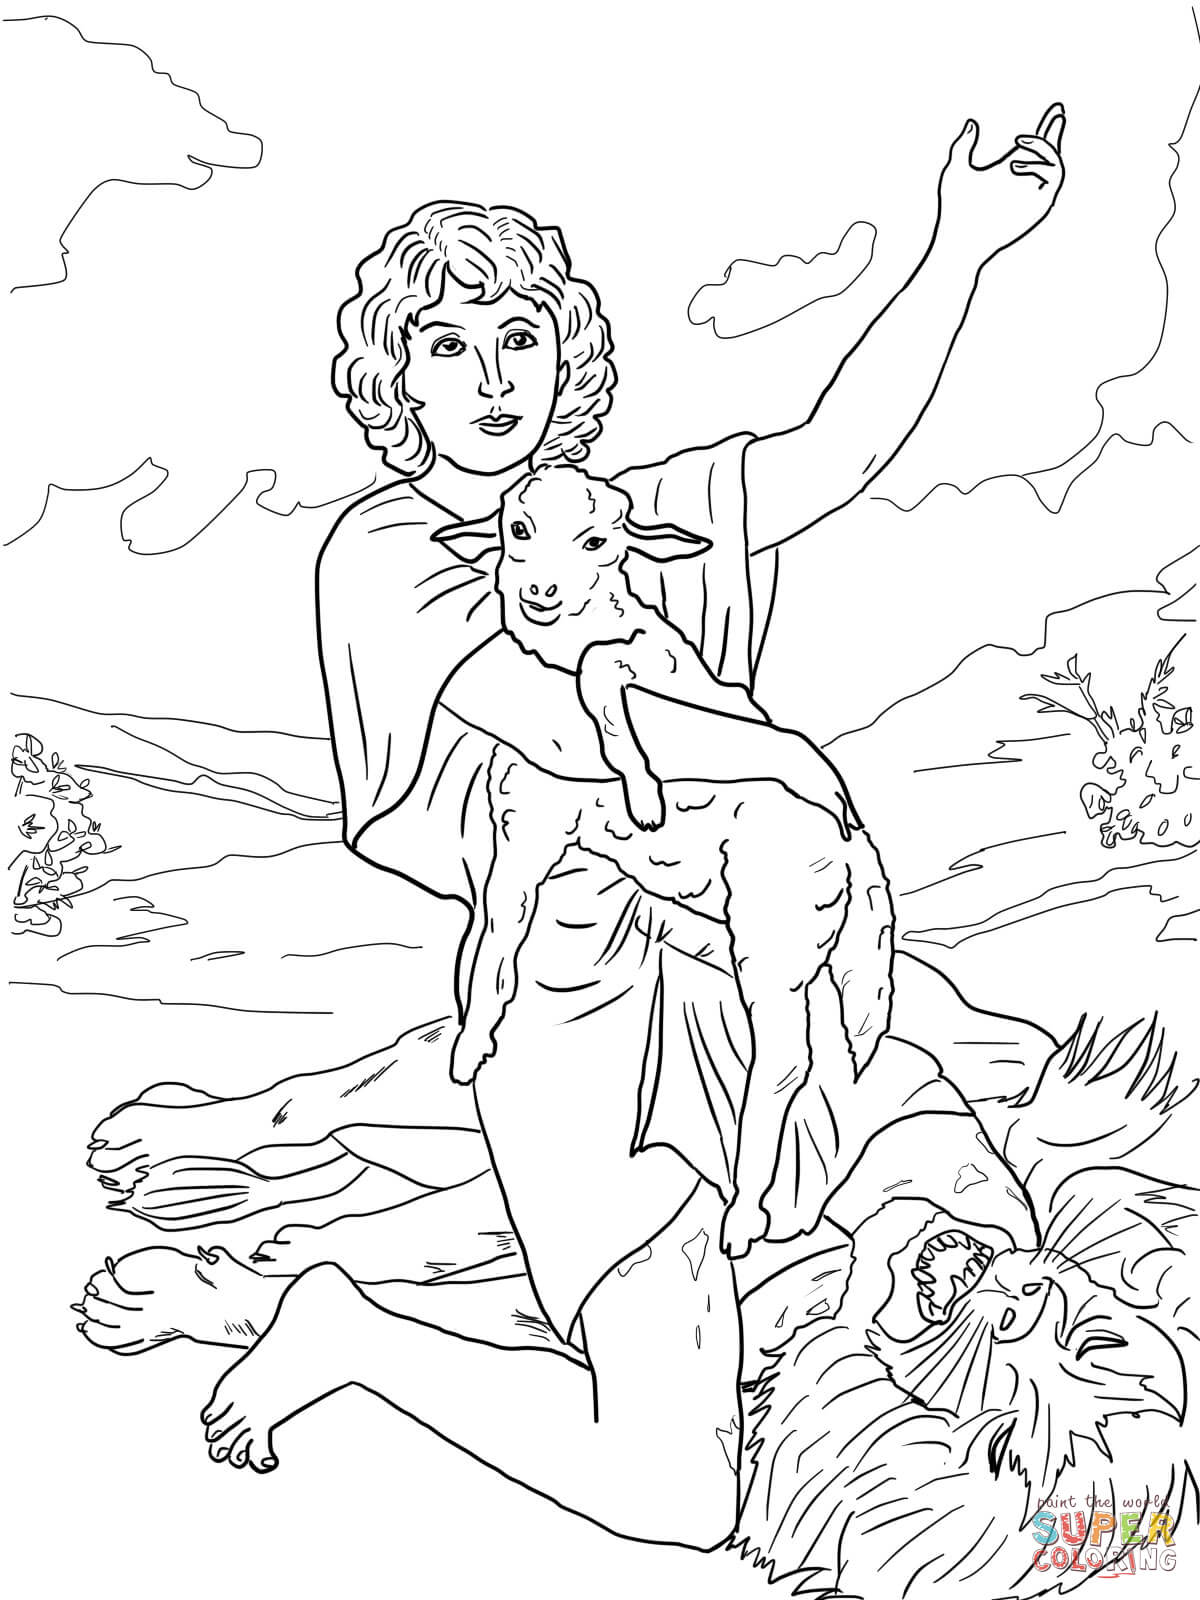 David gives praise to god after killing a lion